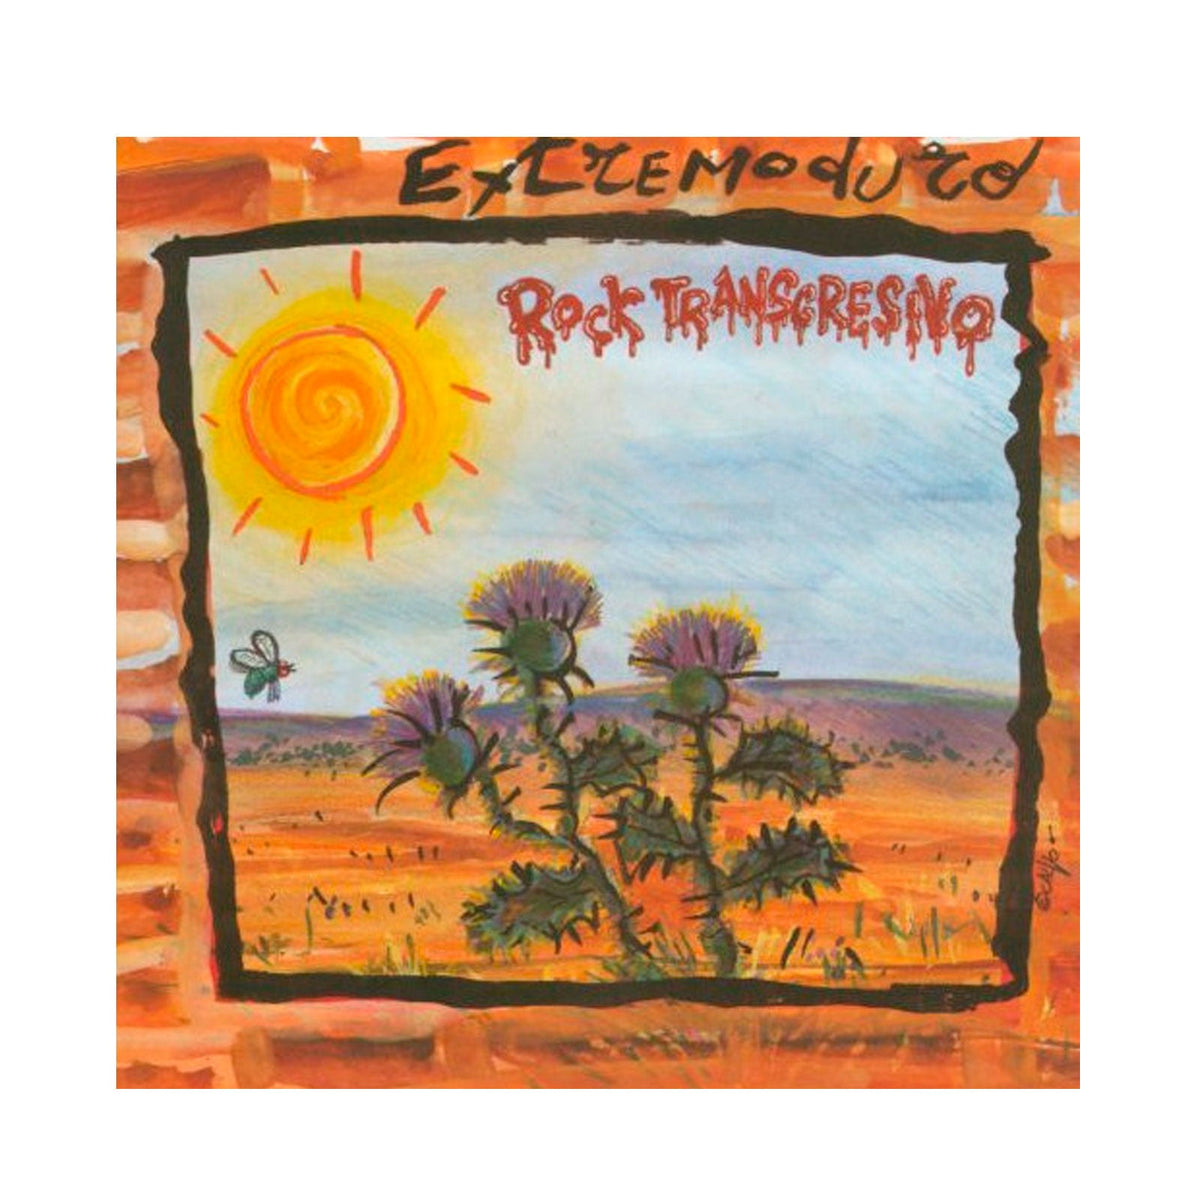 Vinilo LP Extremoduro - Deltoya - Vinilo Rock - Extremoduro